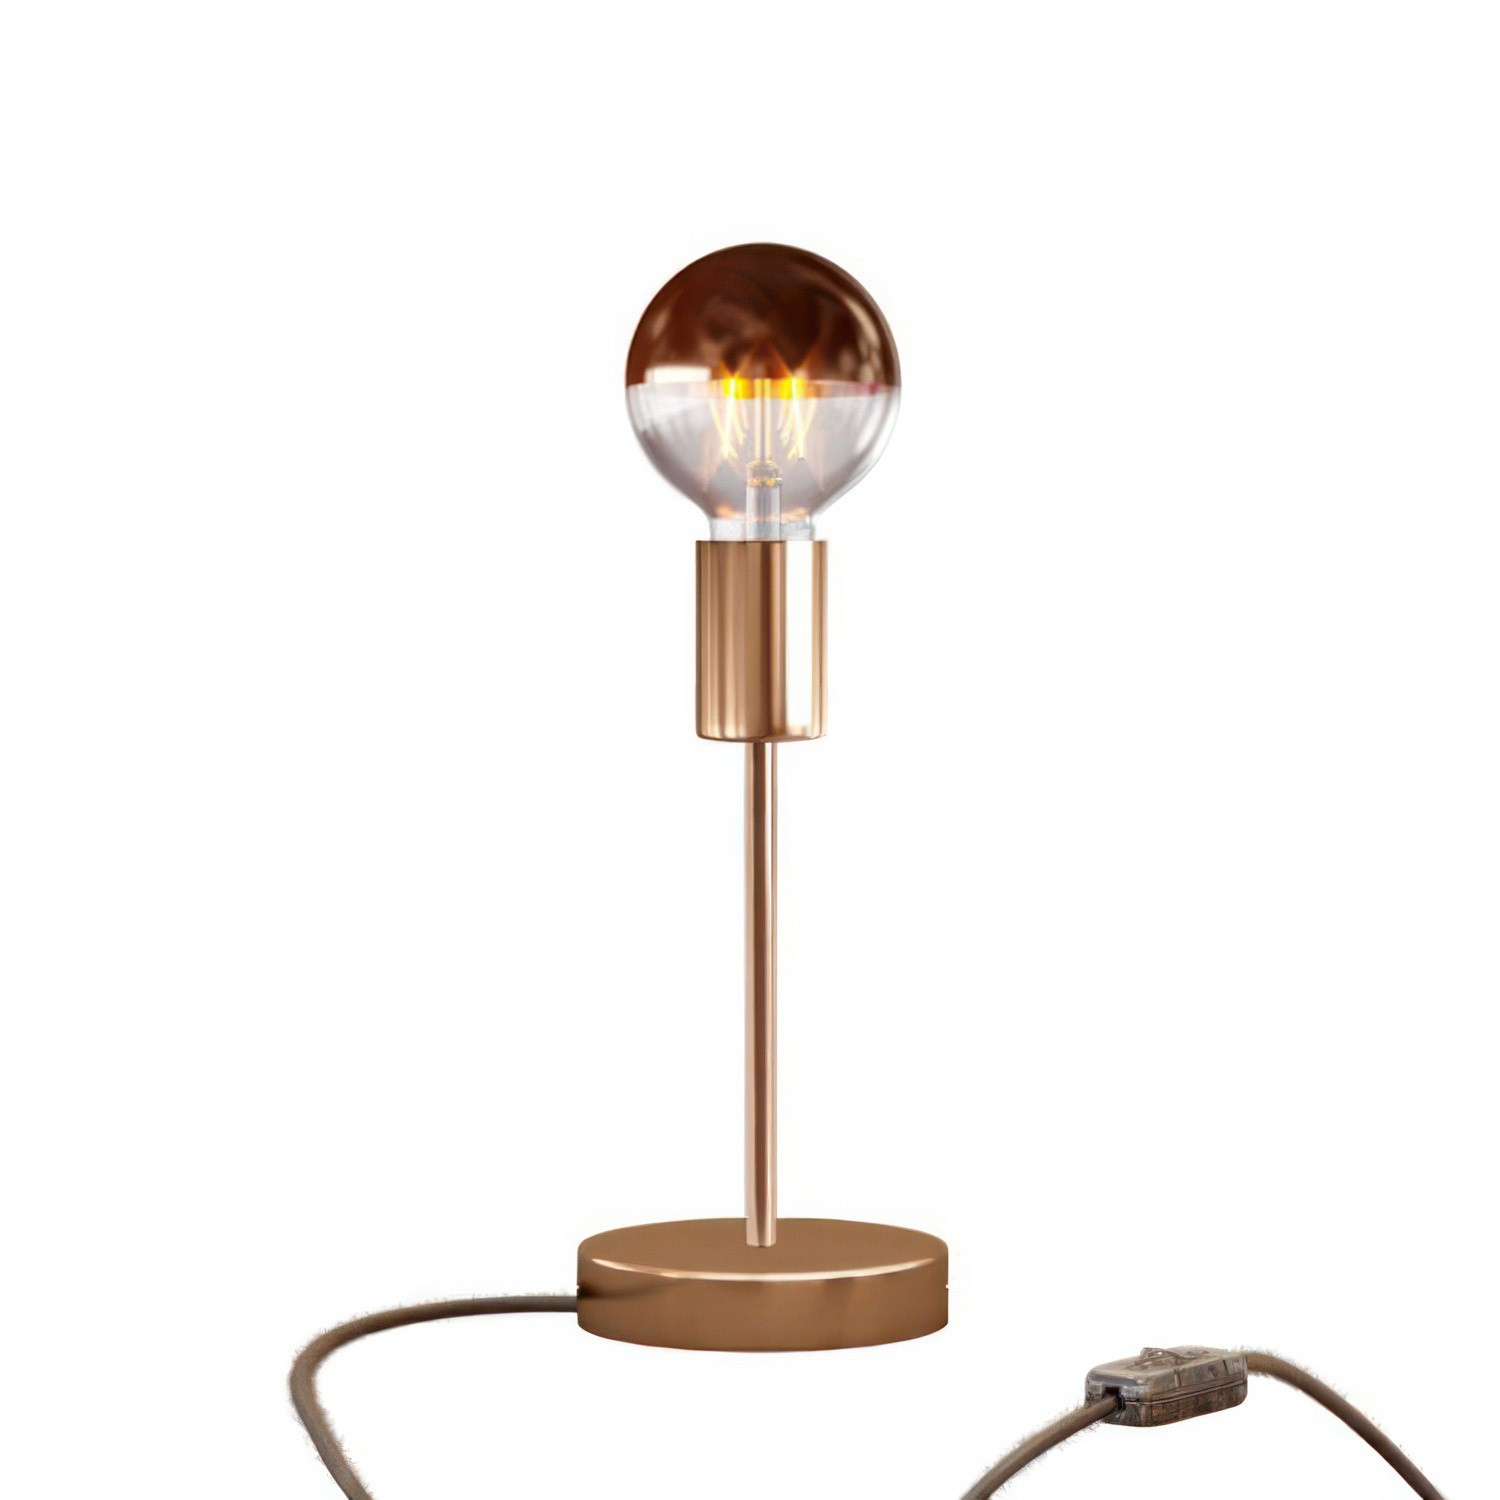 Alzaluce Half Cup Metal Table Lamp with two-pin plug